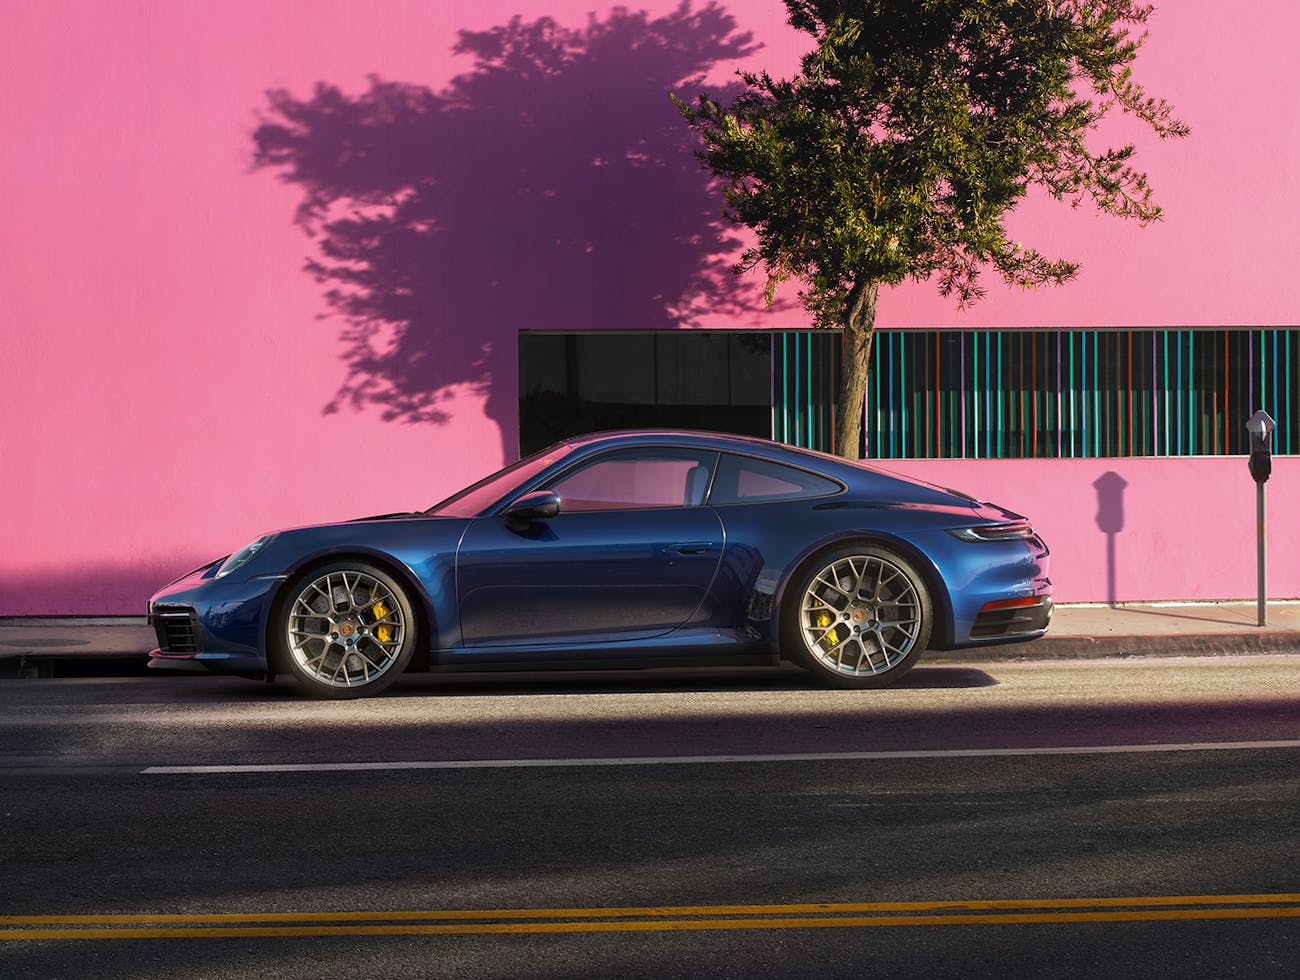 Porsche 911 Carrera 4S in Gentian Blue against pink wall